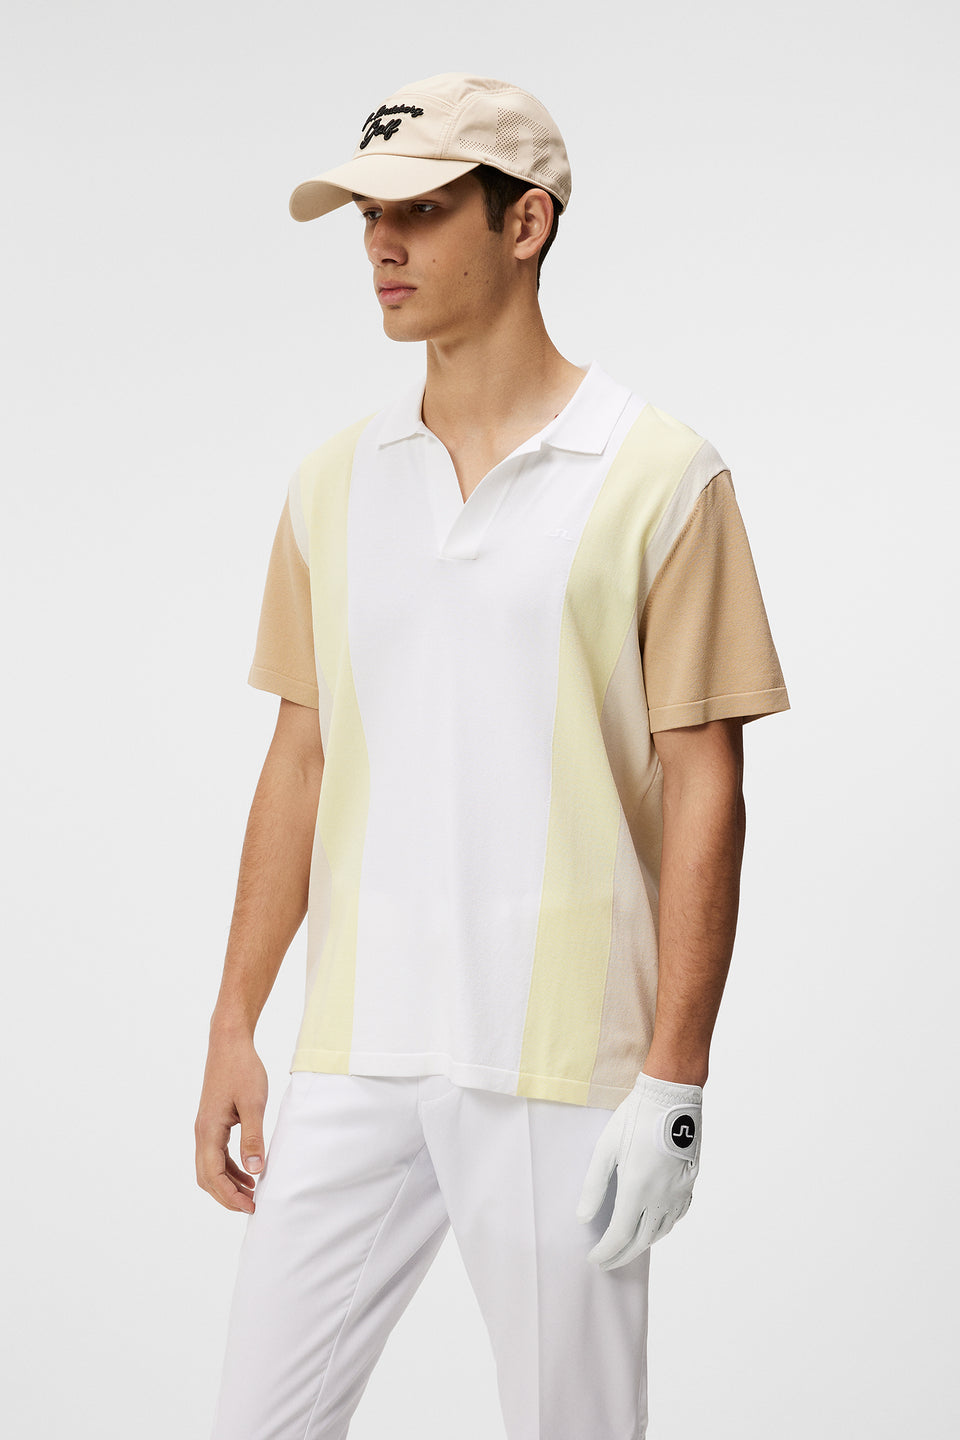 Learco Knitted Shirt / Safari Beige